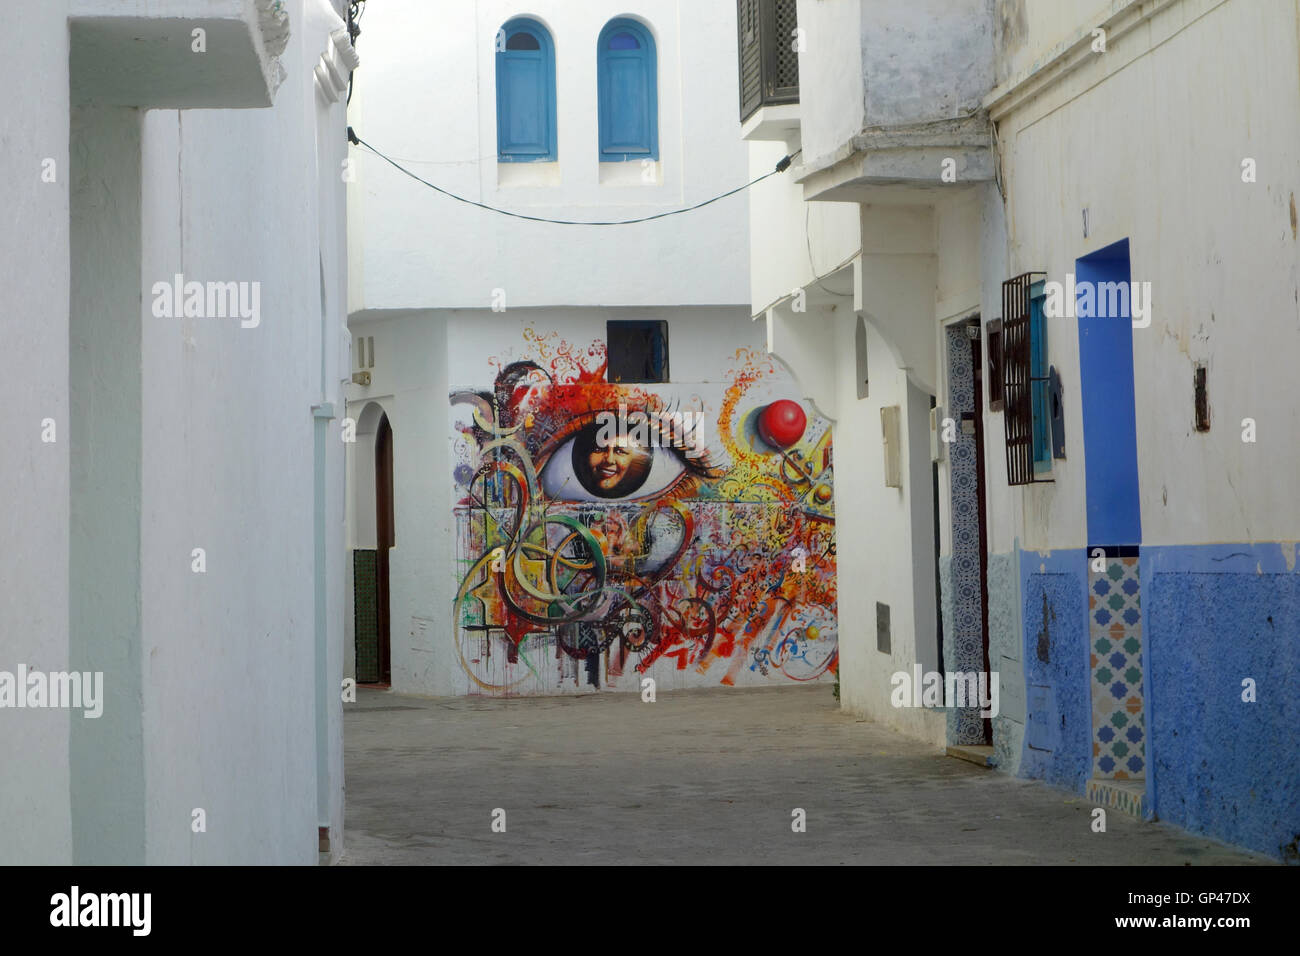 Street art marocain d'un reflet dans un oeil, dans Alsirah, Maroc Banque D'Images